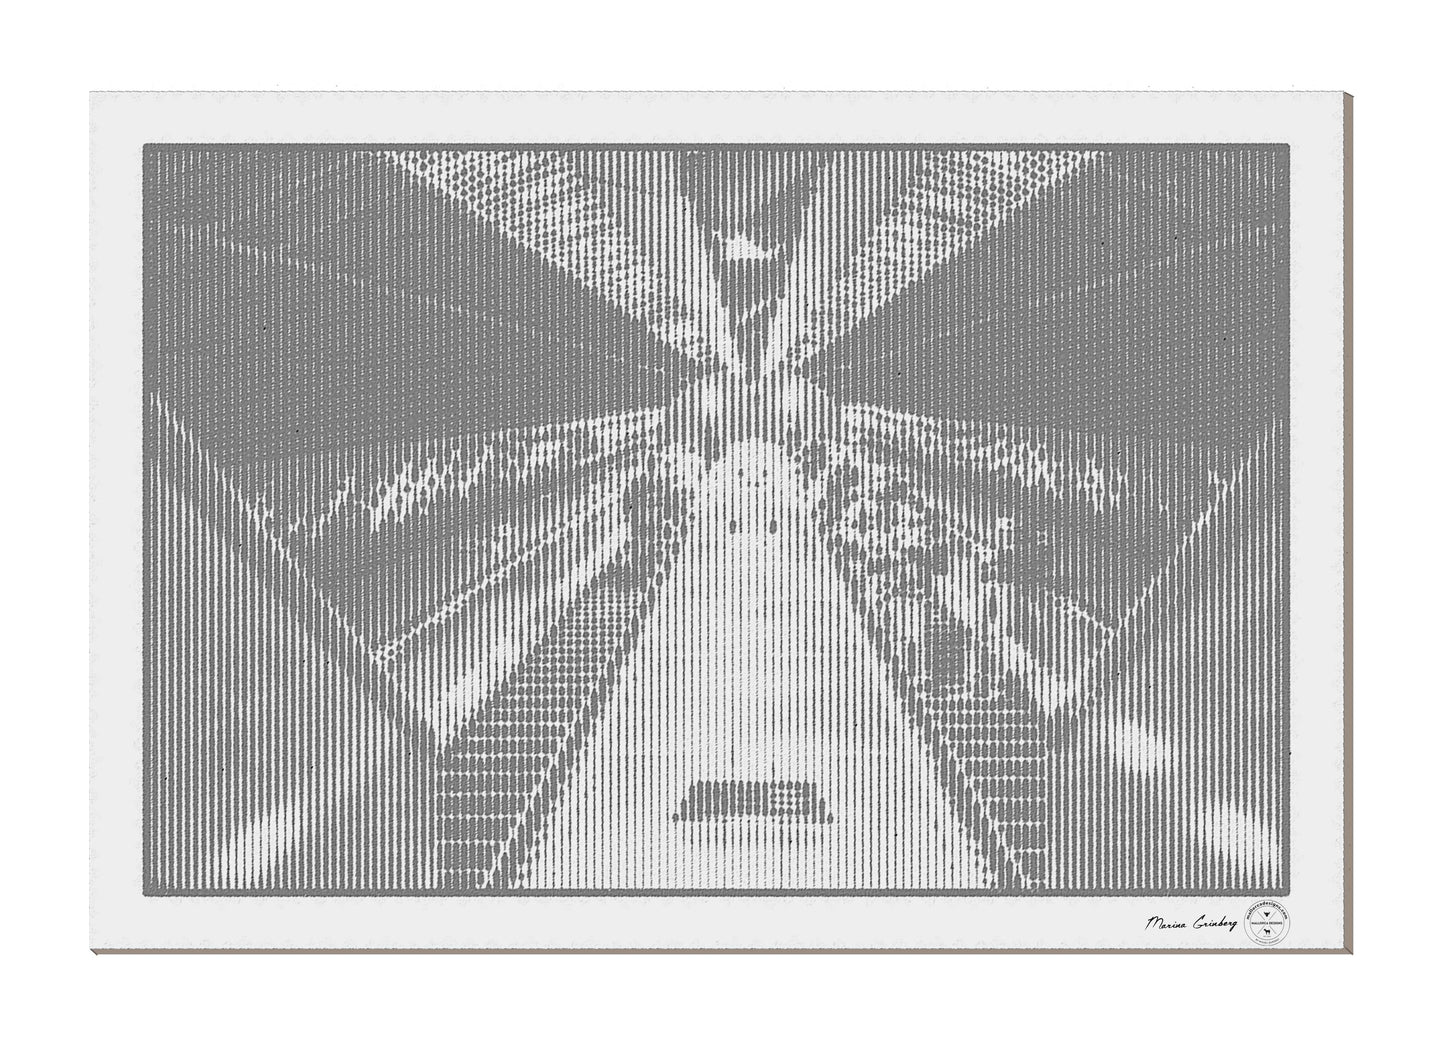 A0 Landscape London Subway Photographer: Marina Grinberg Limited to 50